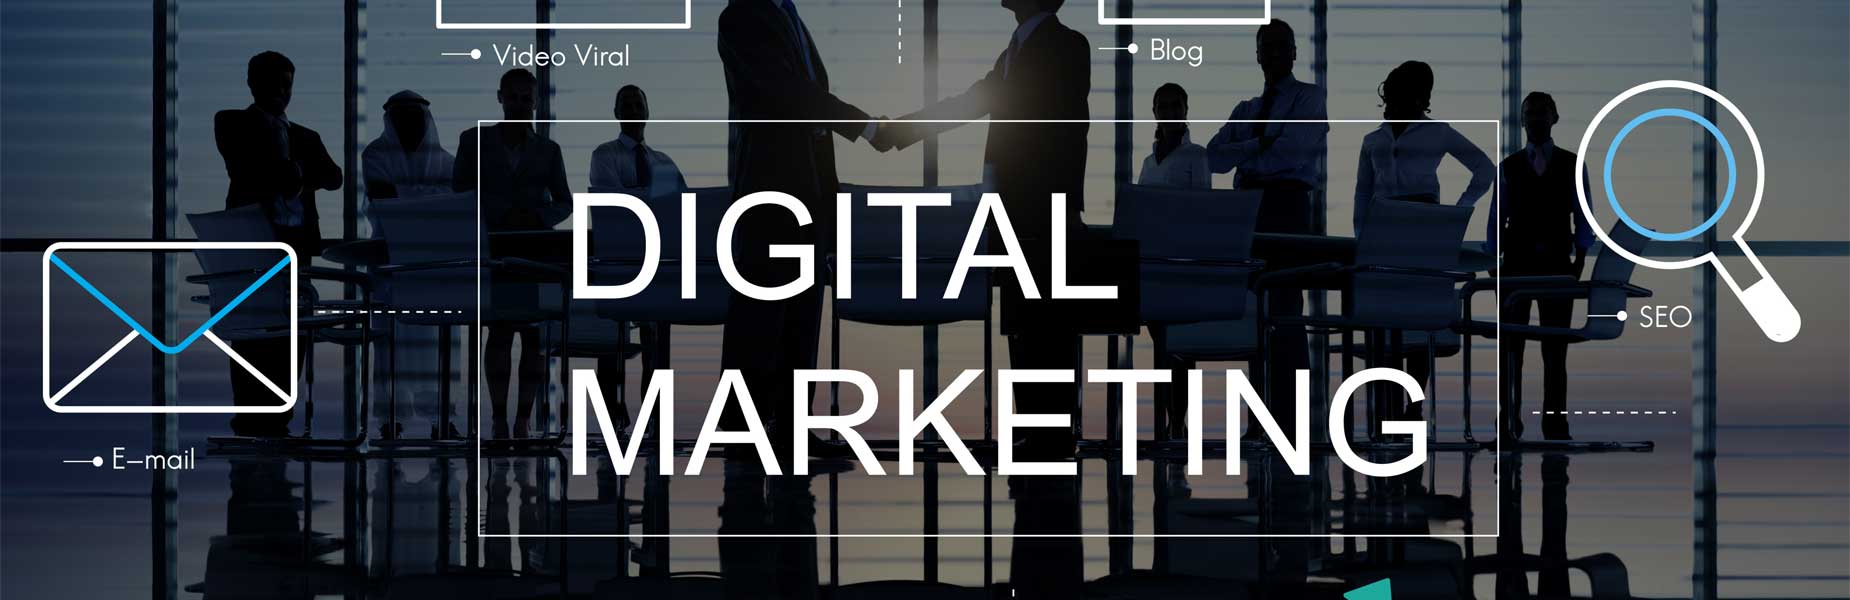 digital marketing header background